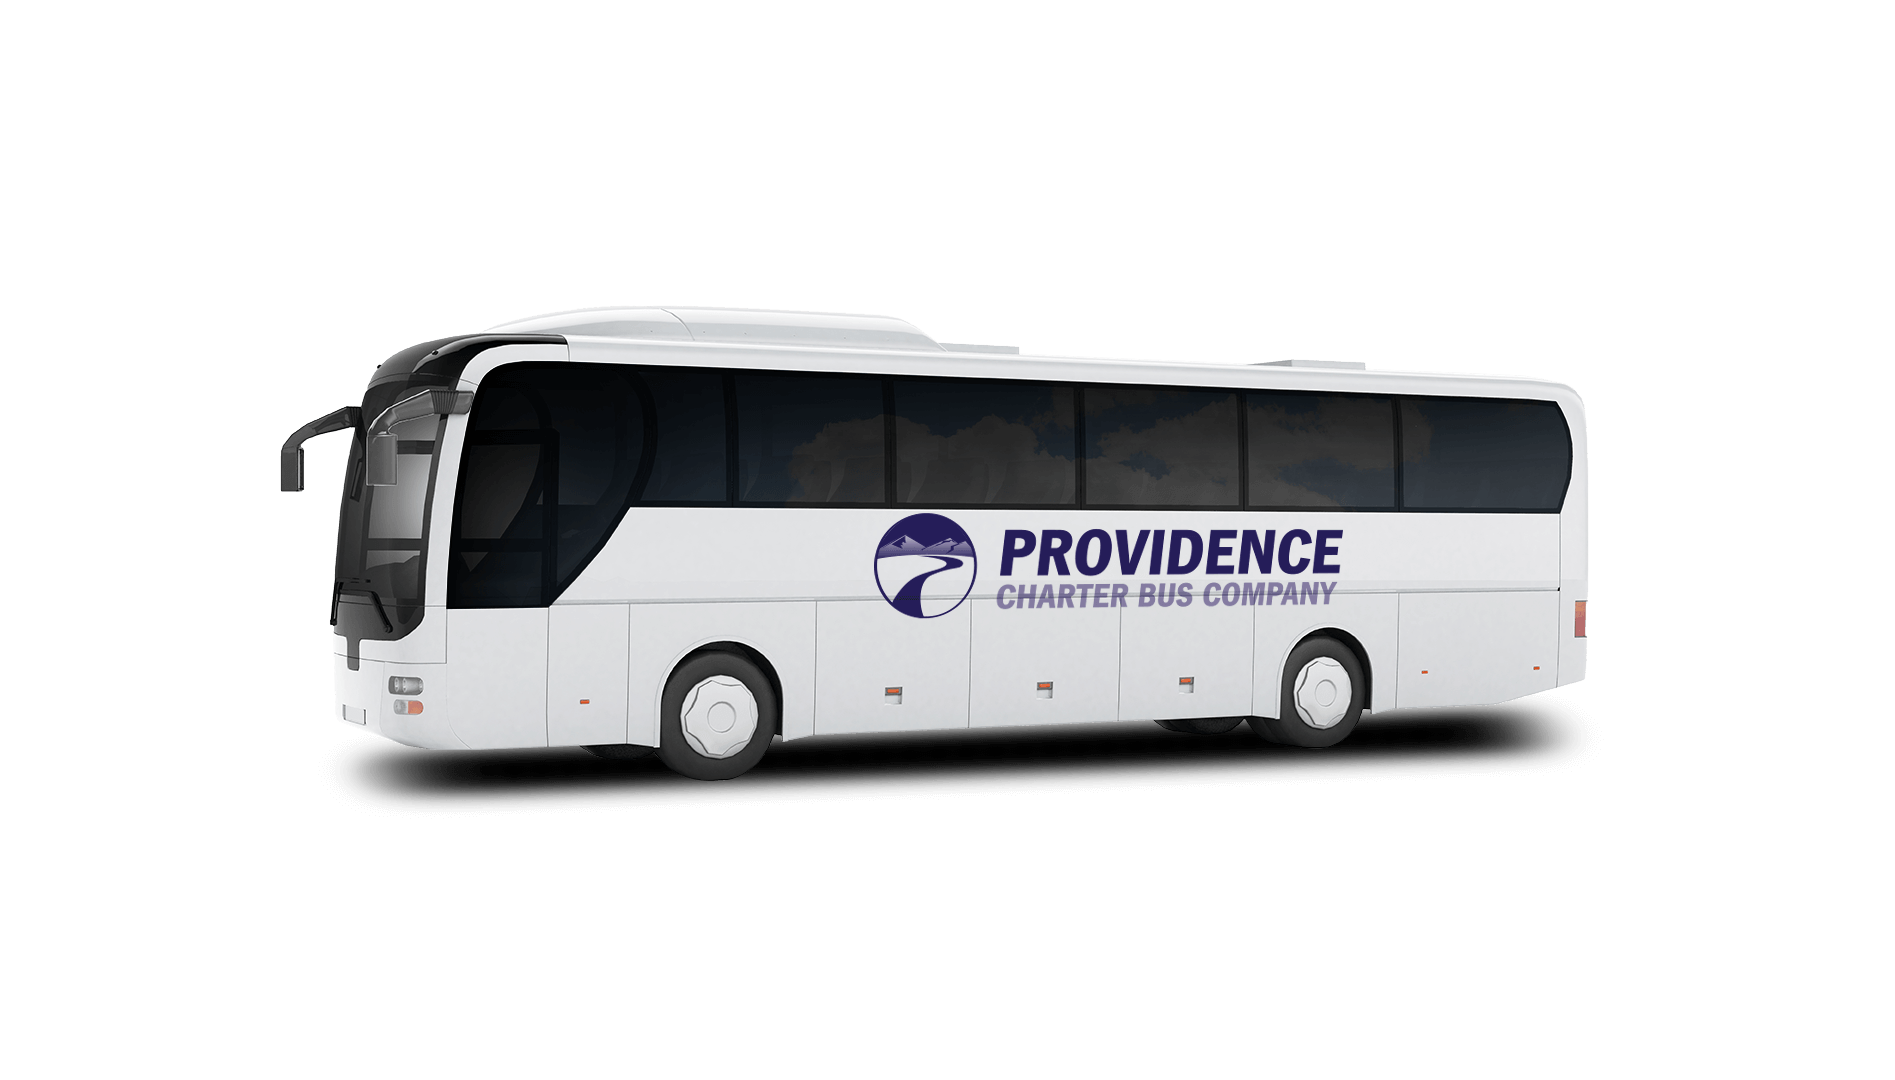 a plain white charter bus with a "Providence Charter Bus Company" logo